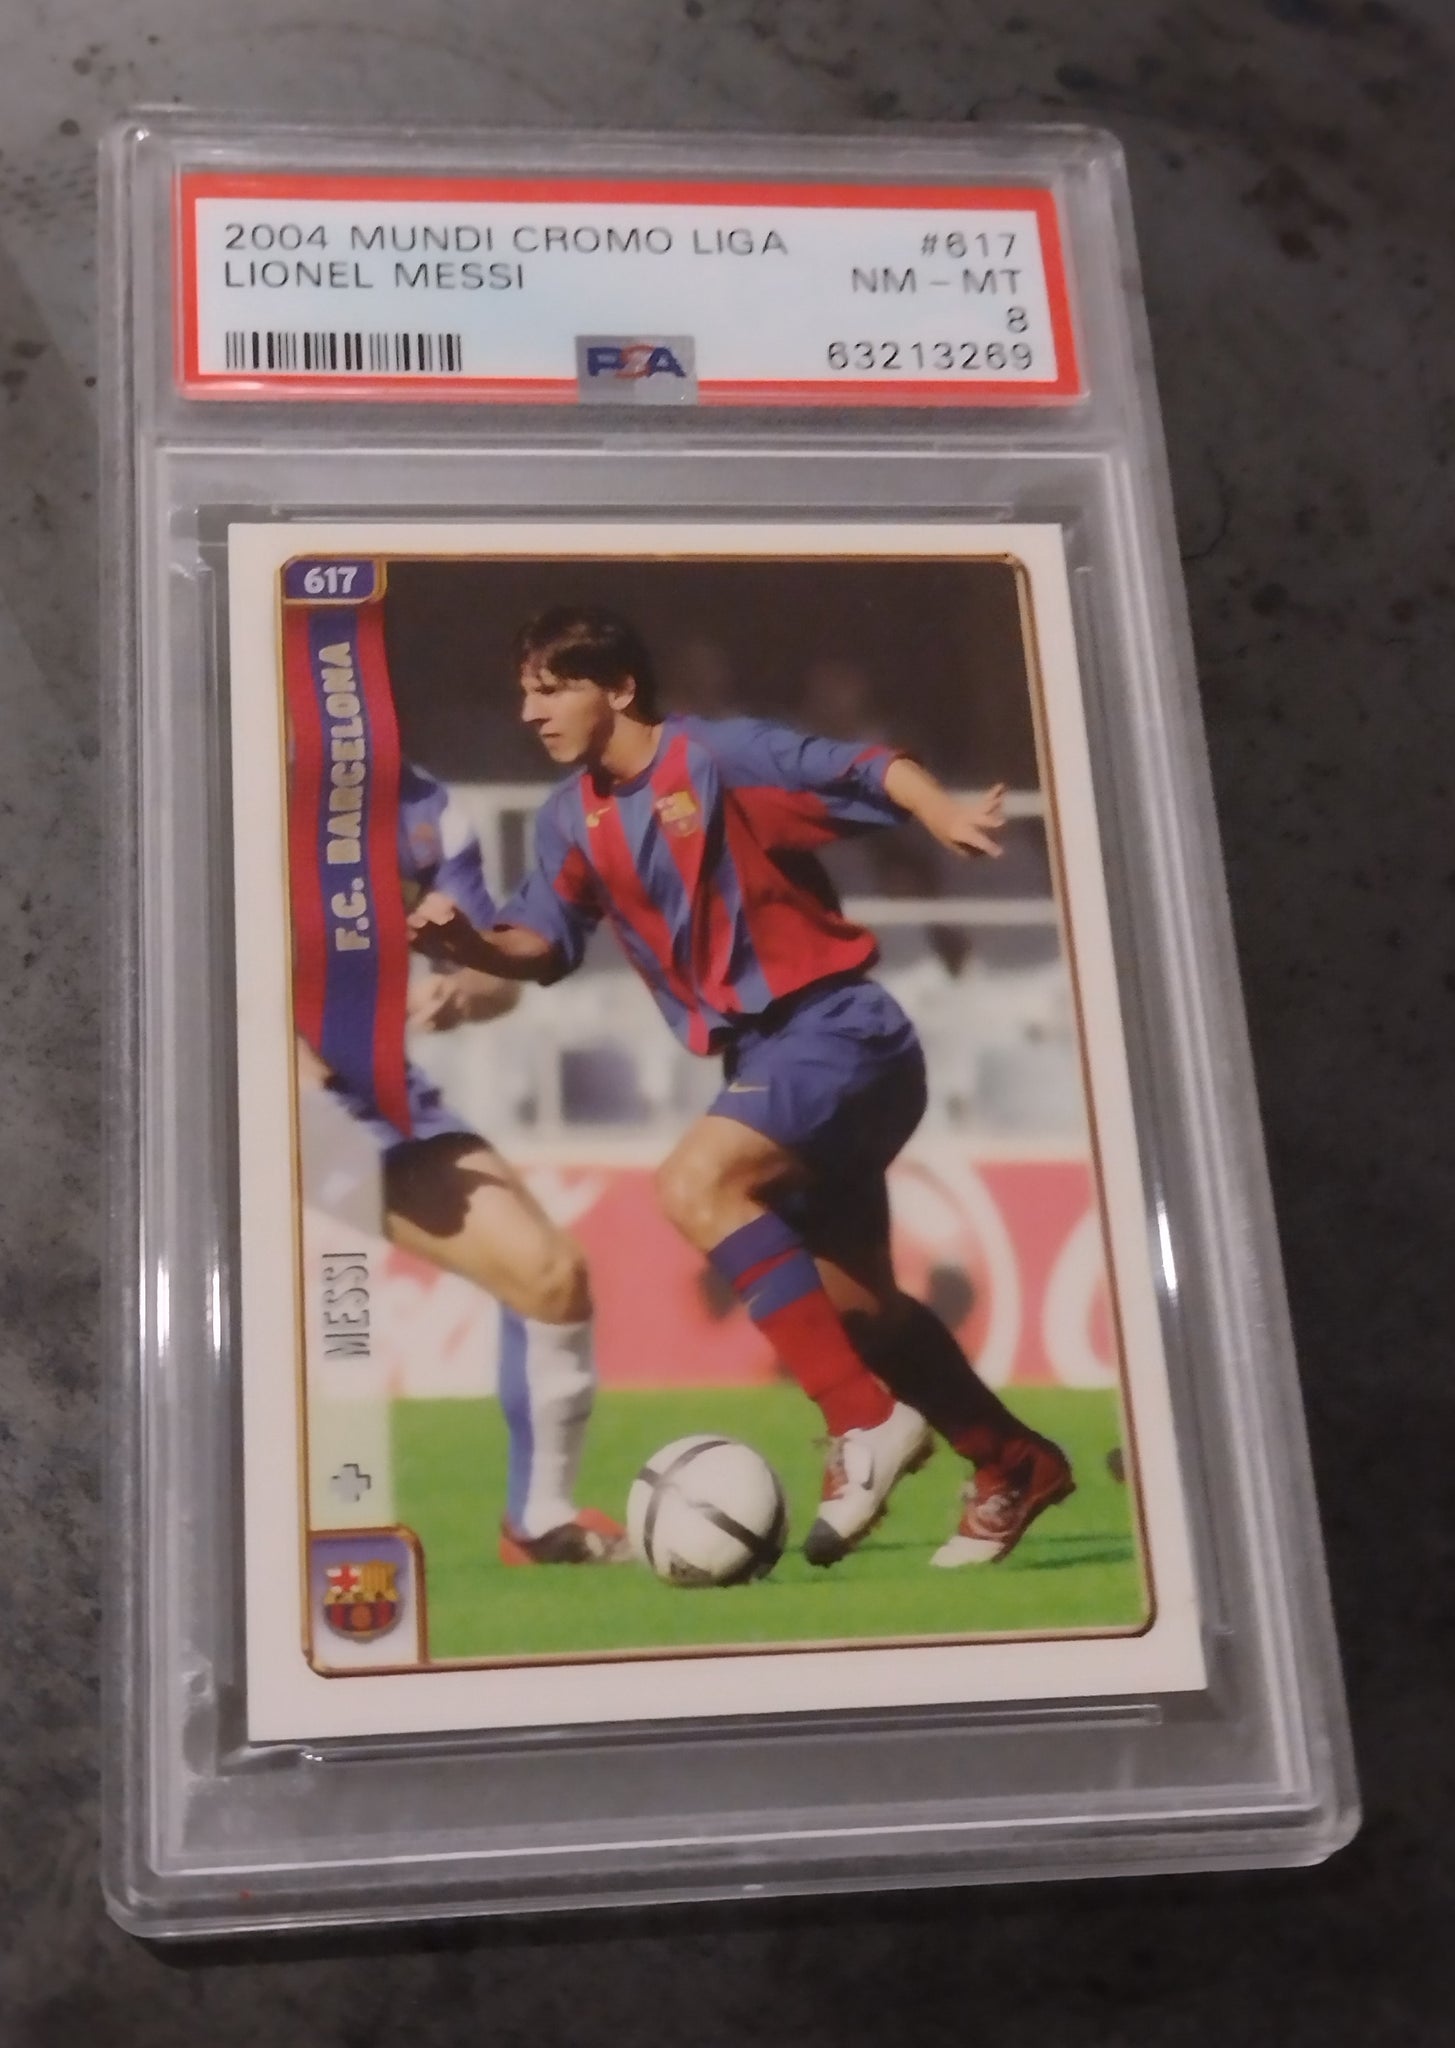 2005 Las Fichas de La Liga Mundicromo Lionel Messi #617 PSA 8 Rookie Card